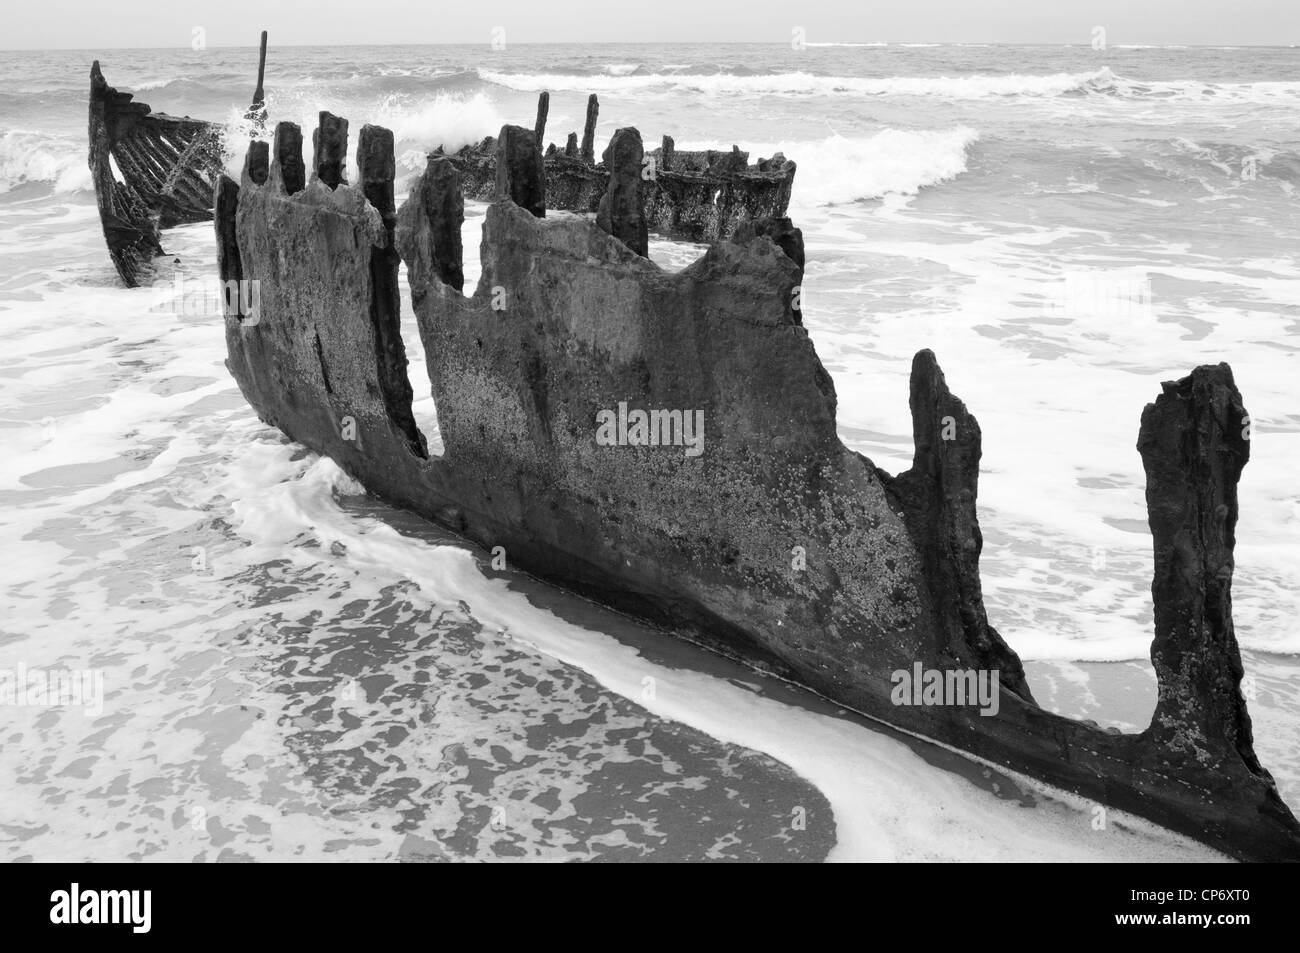 Shipwrecked - Old Shipwreck on a Beach (Black & White Image). Moffat Beach, Queensland (QLD), Australia Stock Photo